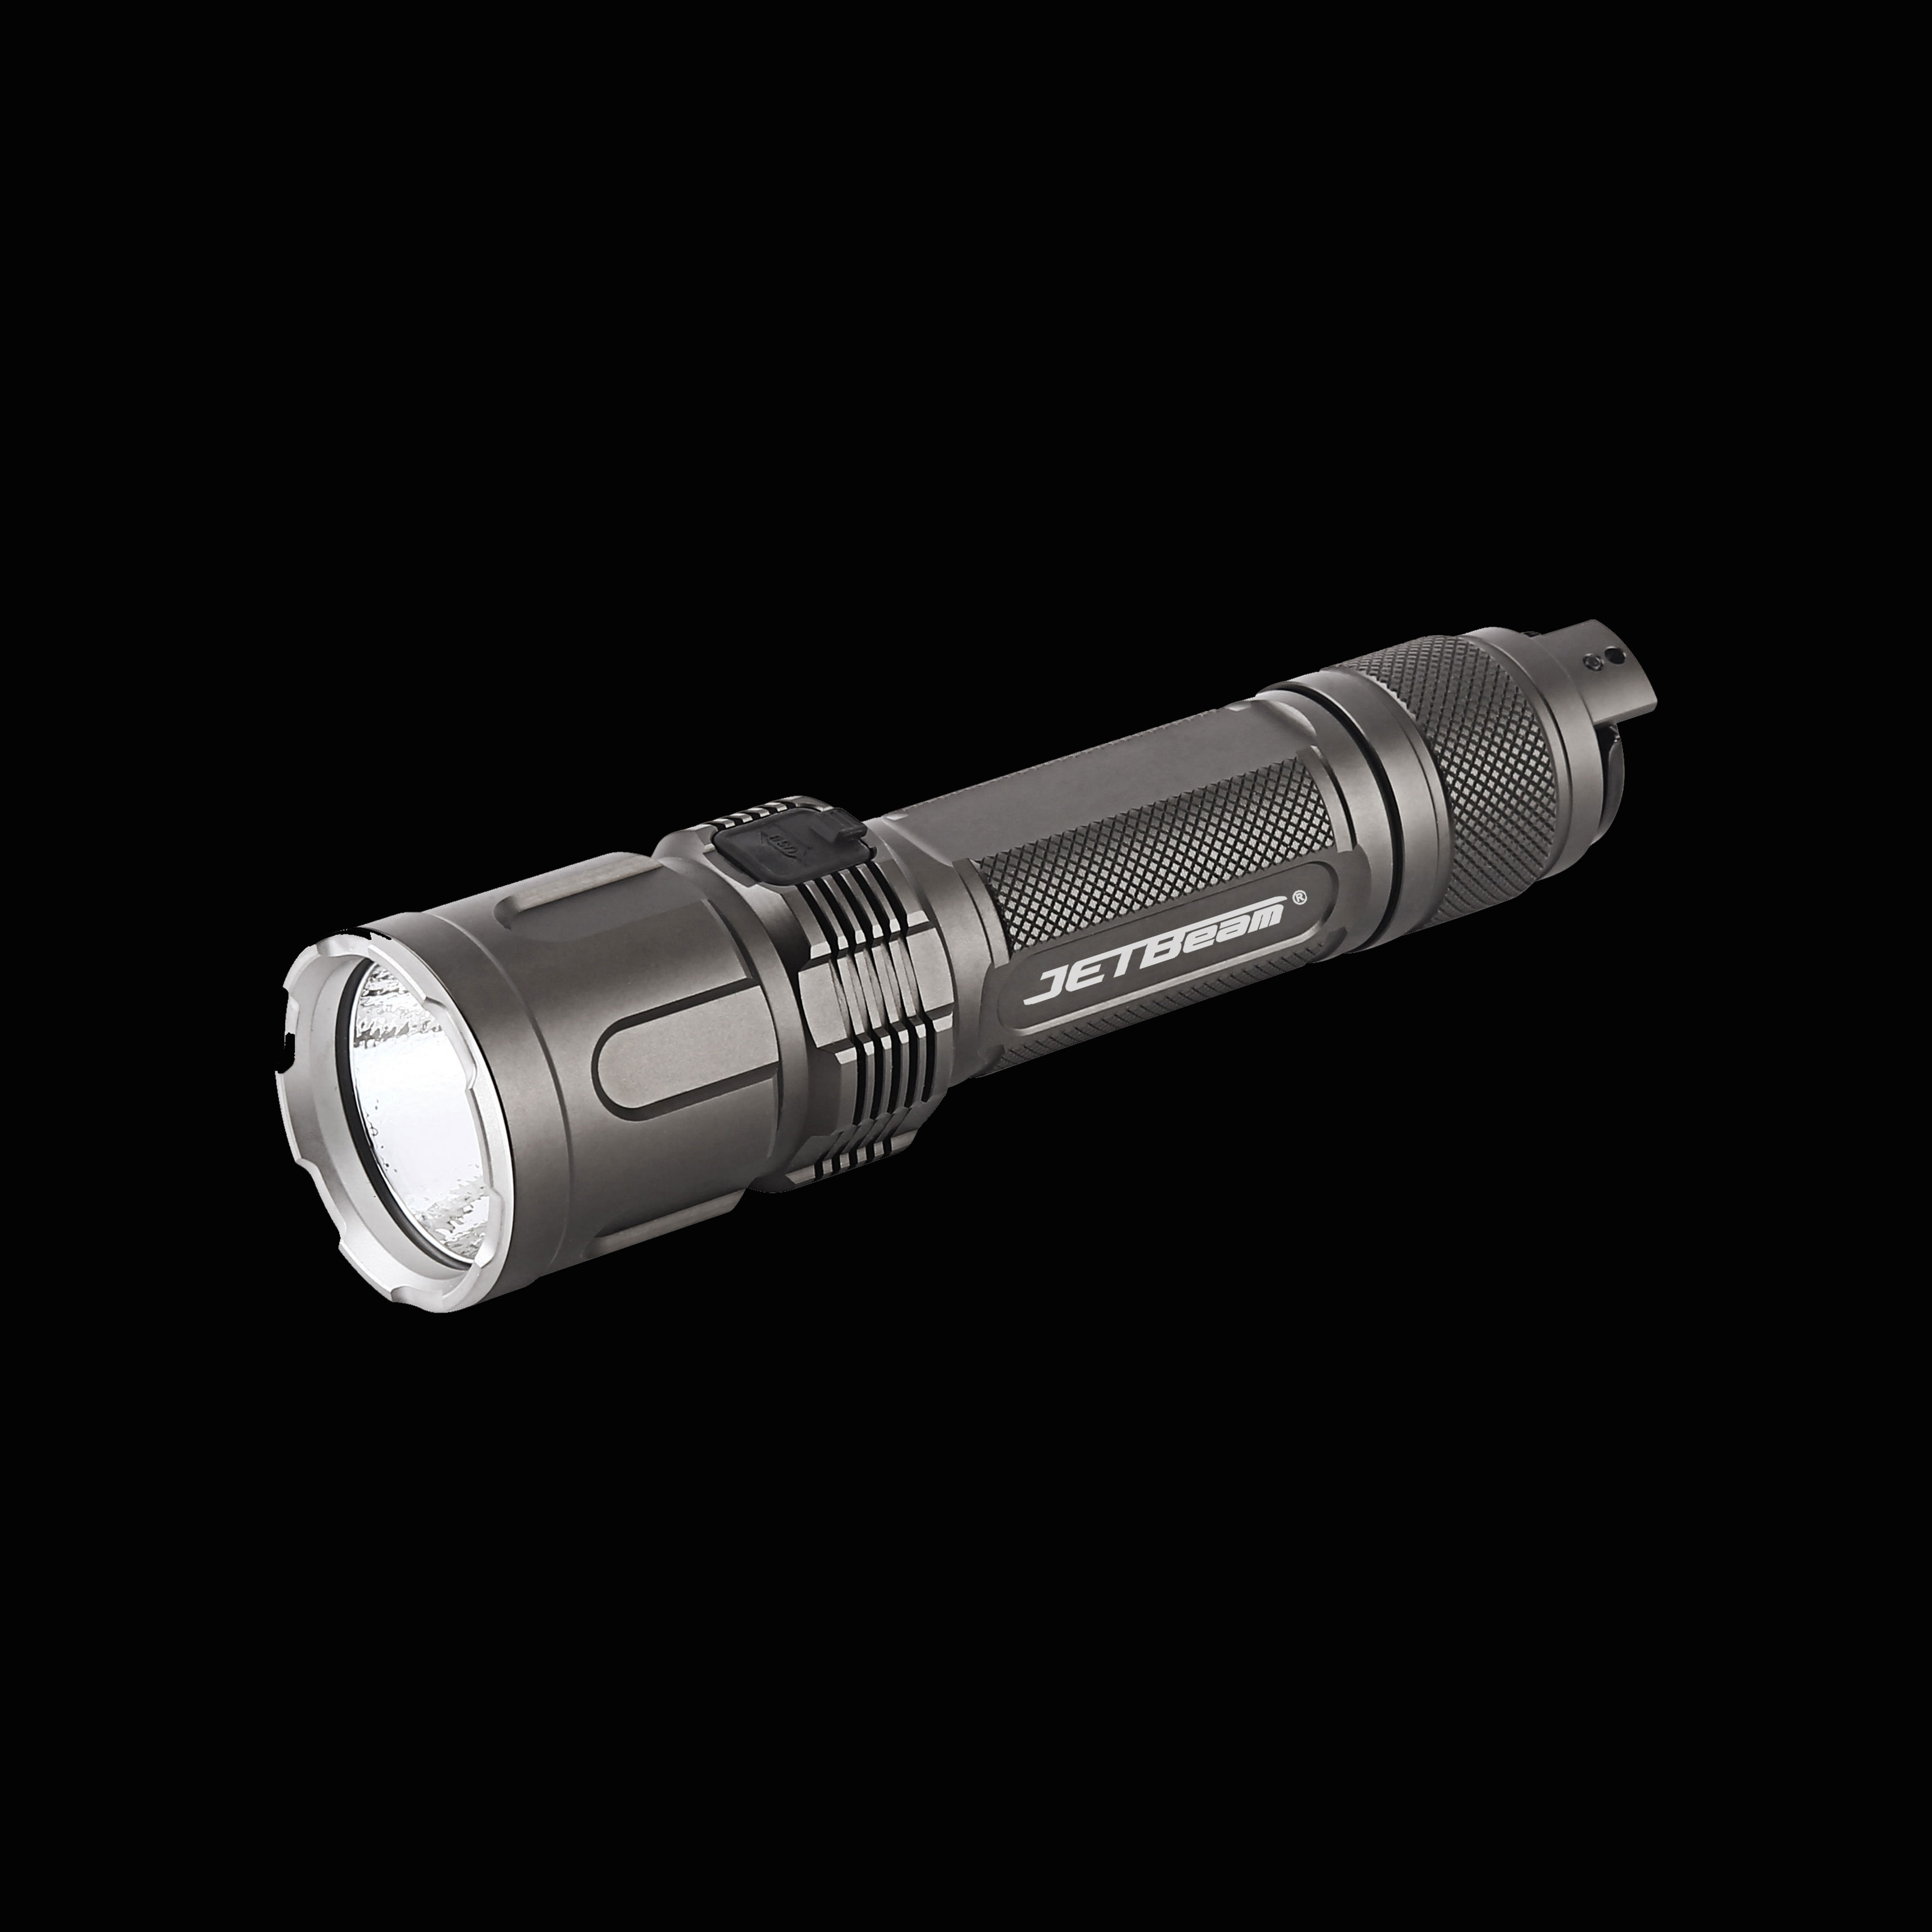 Lampe torche LED puissante NITEYE Jetbeam 3M PRO - 1100 lumens